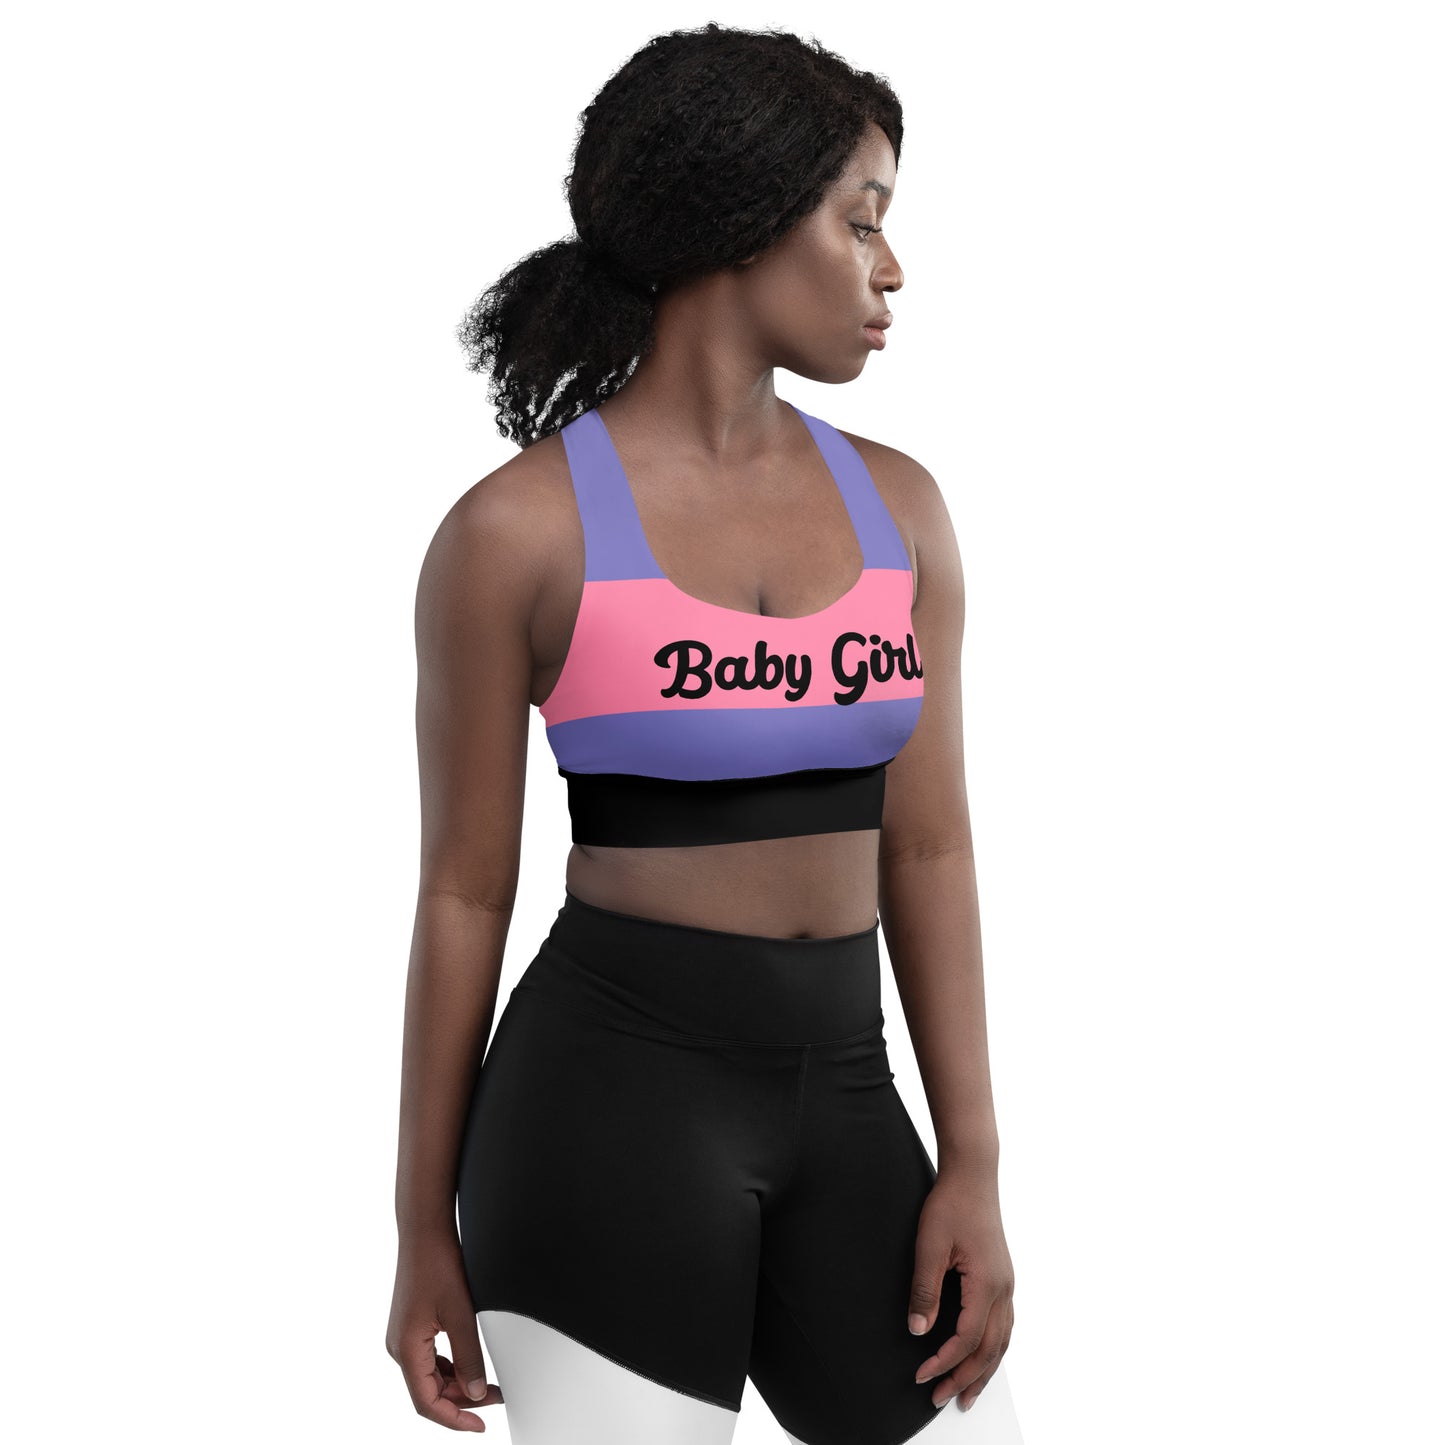 Baby Girl-Multicolor Sports Bra 4.3